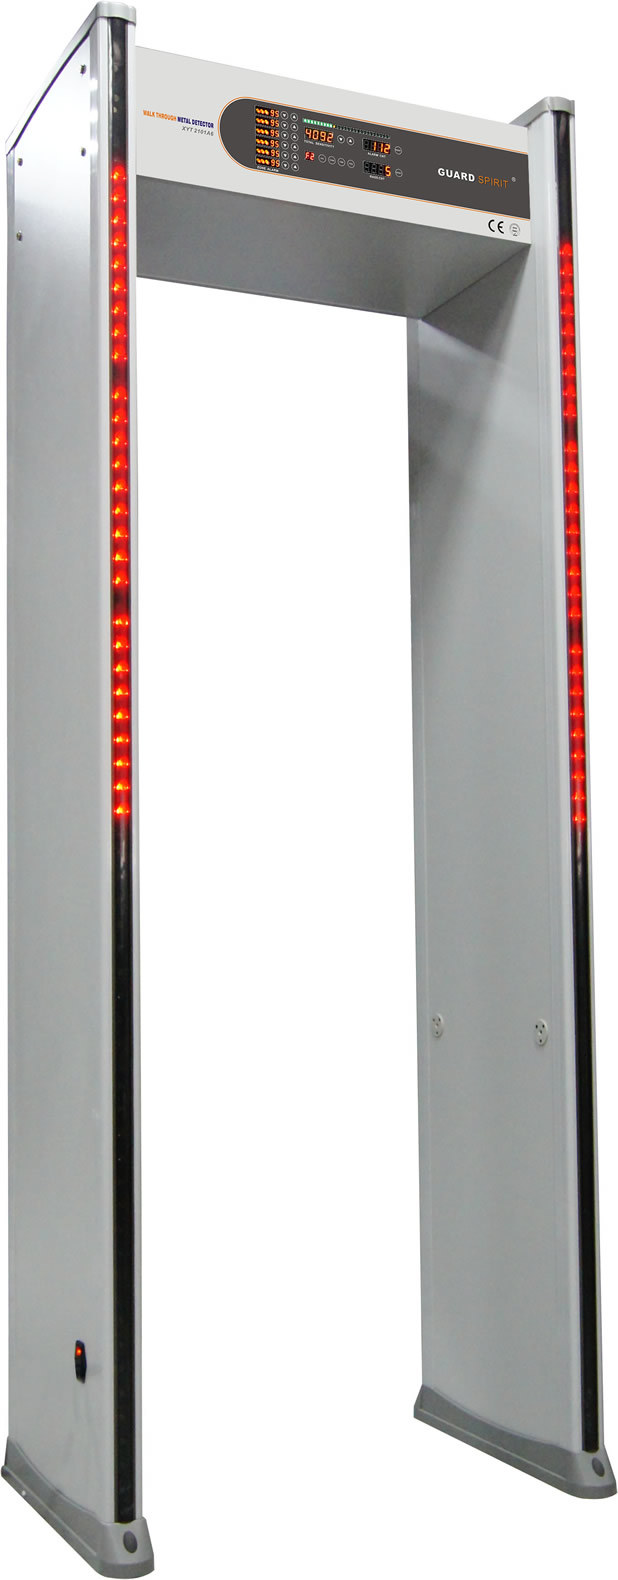 Walk Through Door Frame Metal Detector with 4 LED Columns